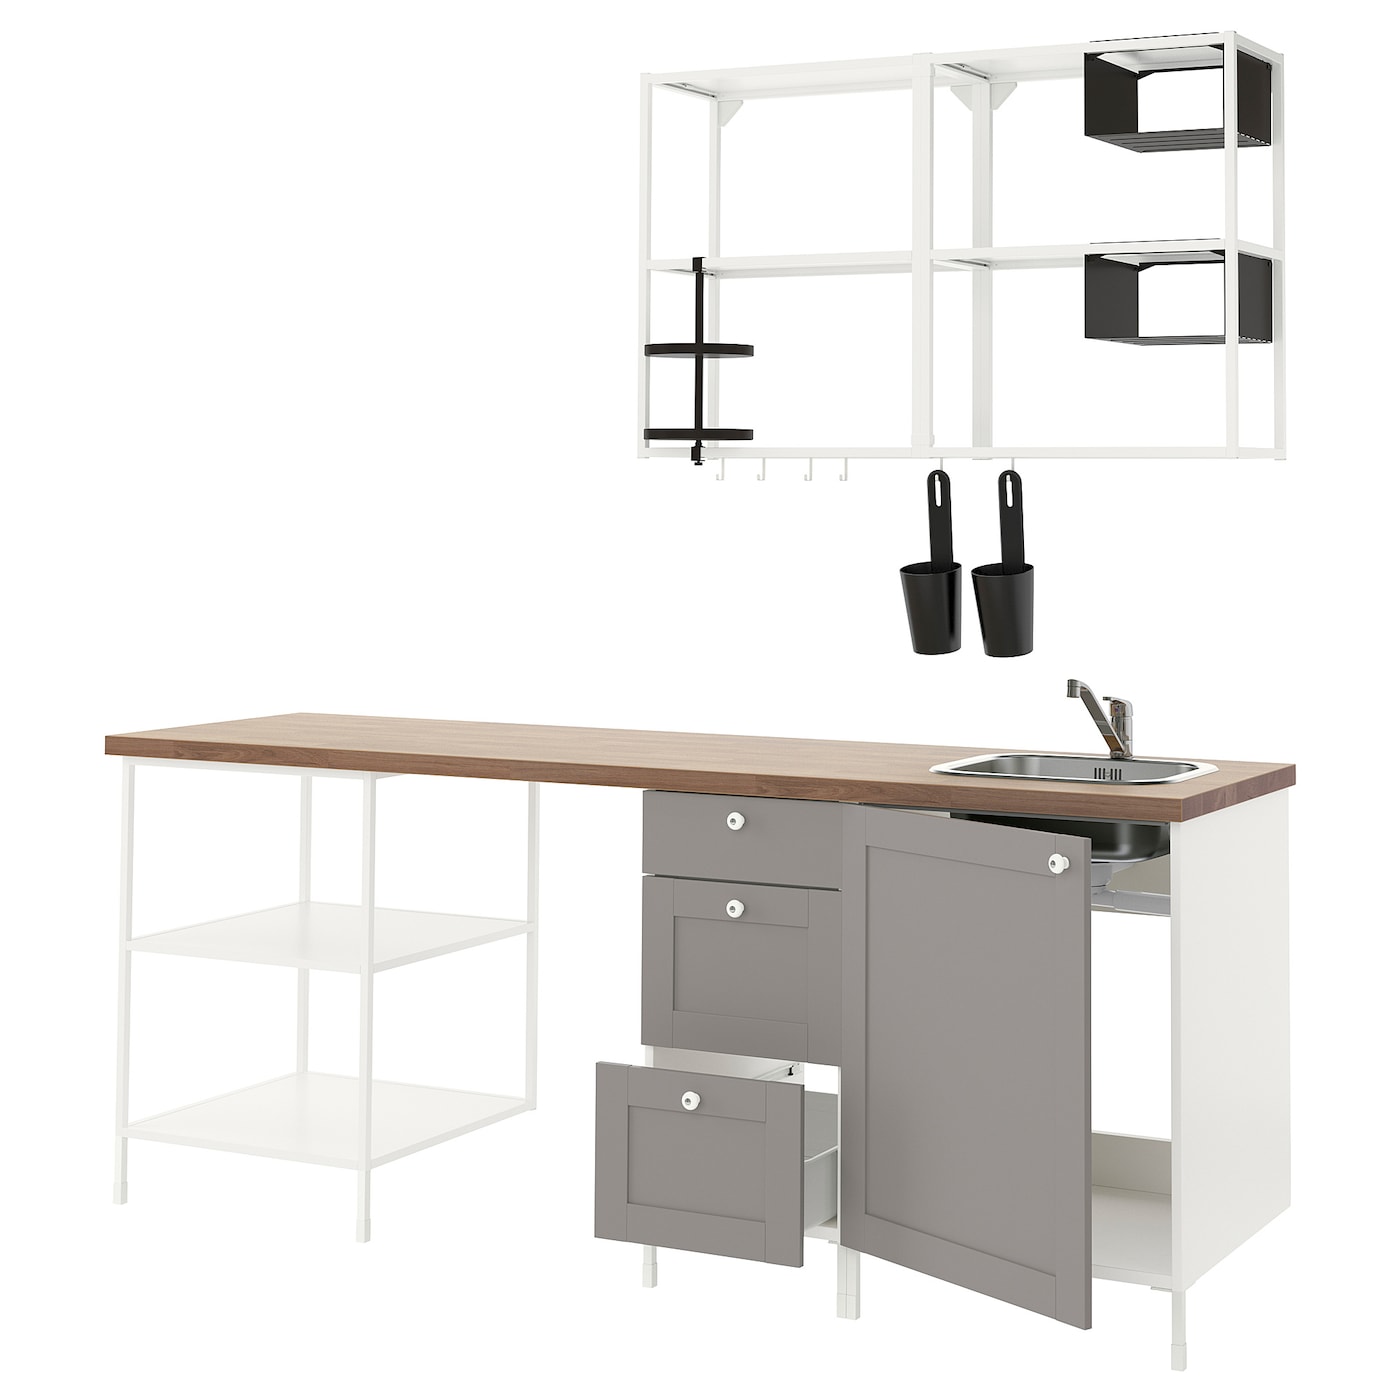 Кухонная комбинация для хранения вещей - ENHET  IKEA/ ЭНХЕТ ИКЕА, 223х63,5х222 см, белый/серый/бежевый